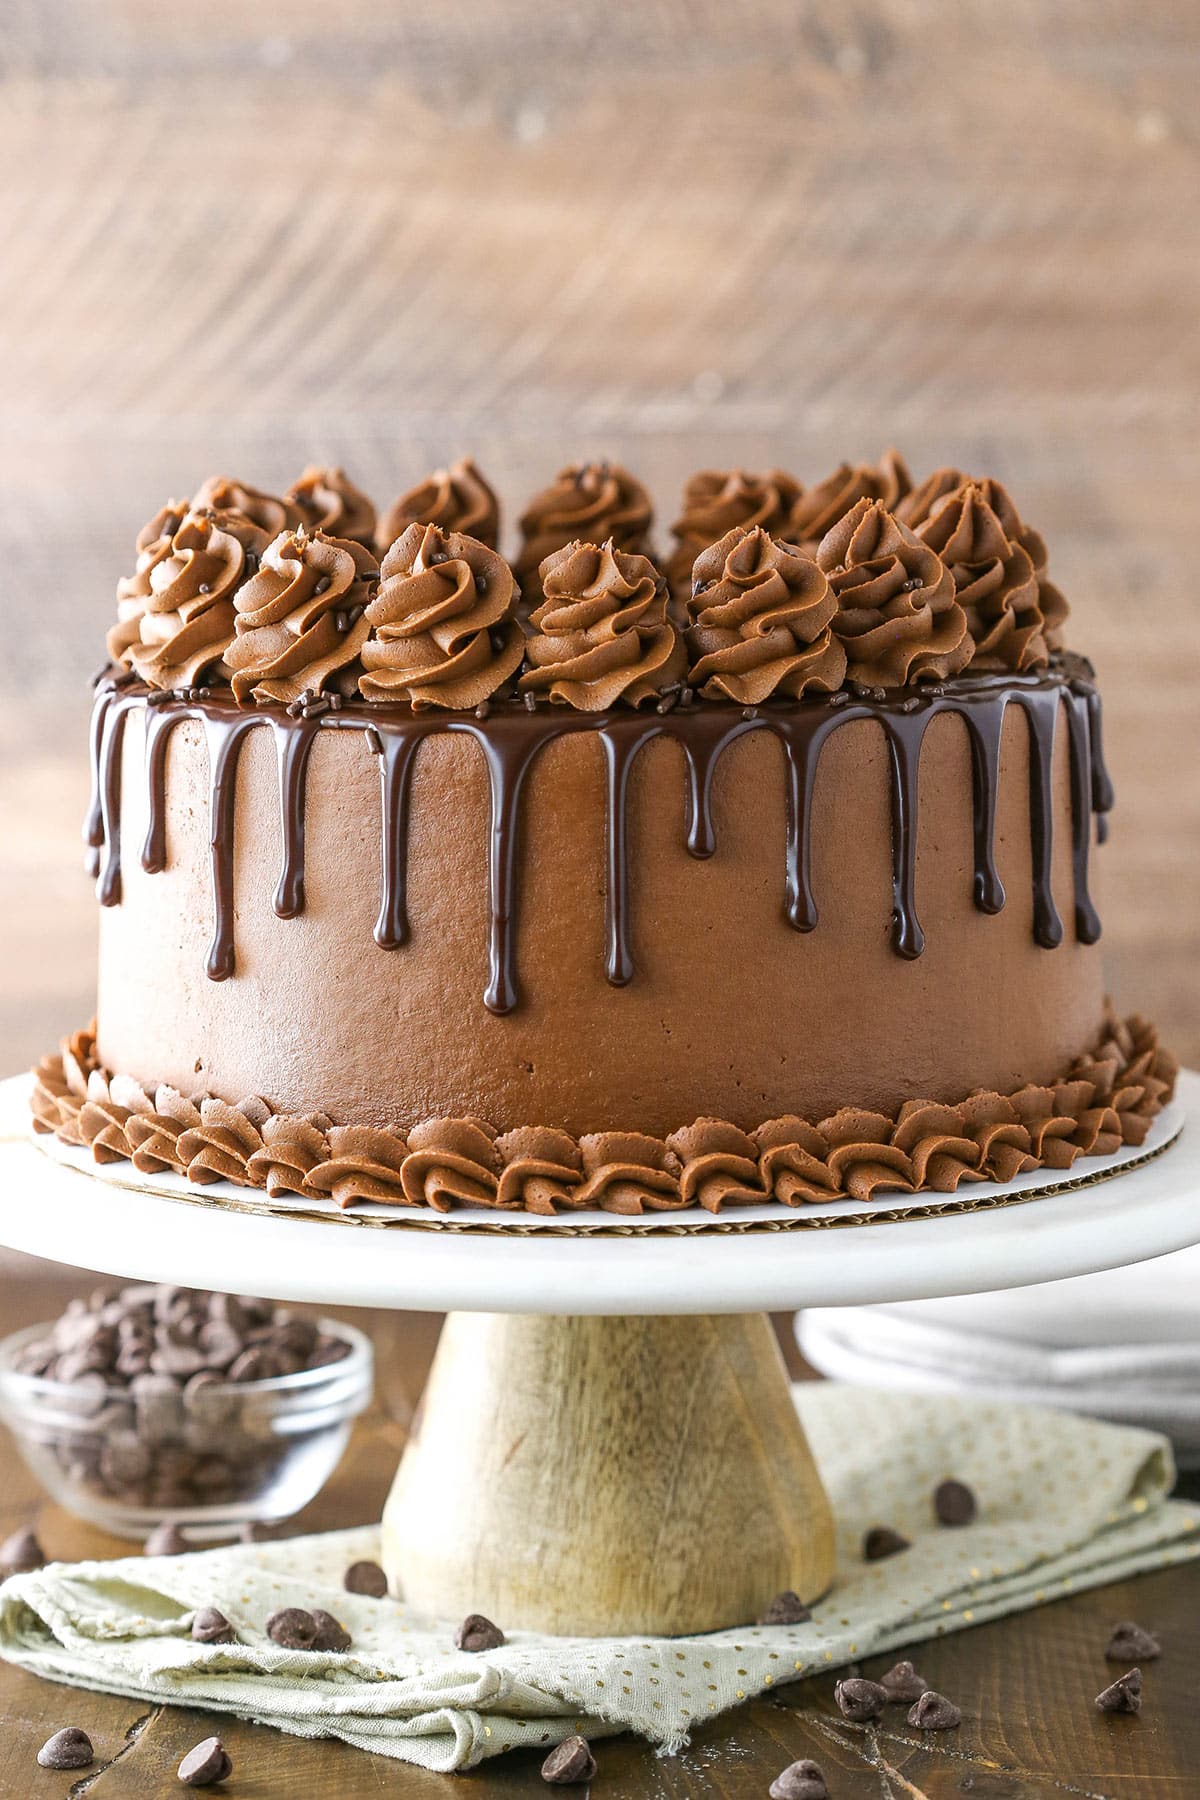 A homemade chocolate cake on a cake stand